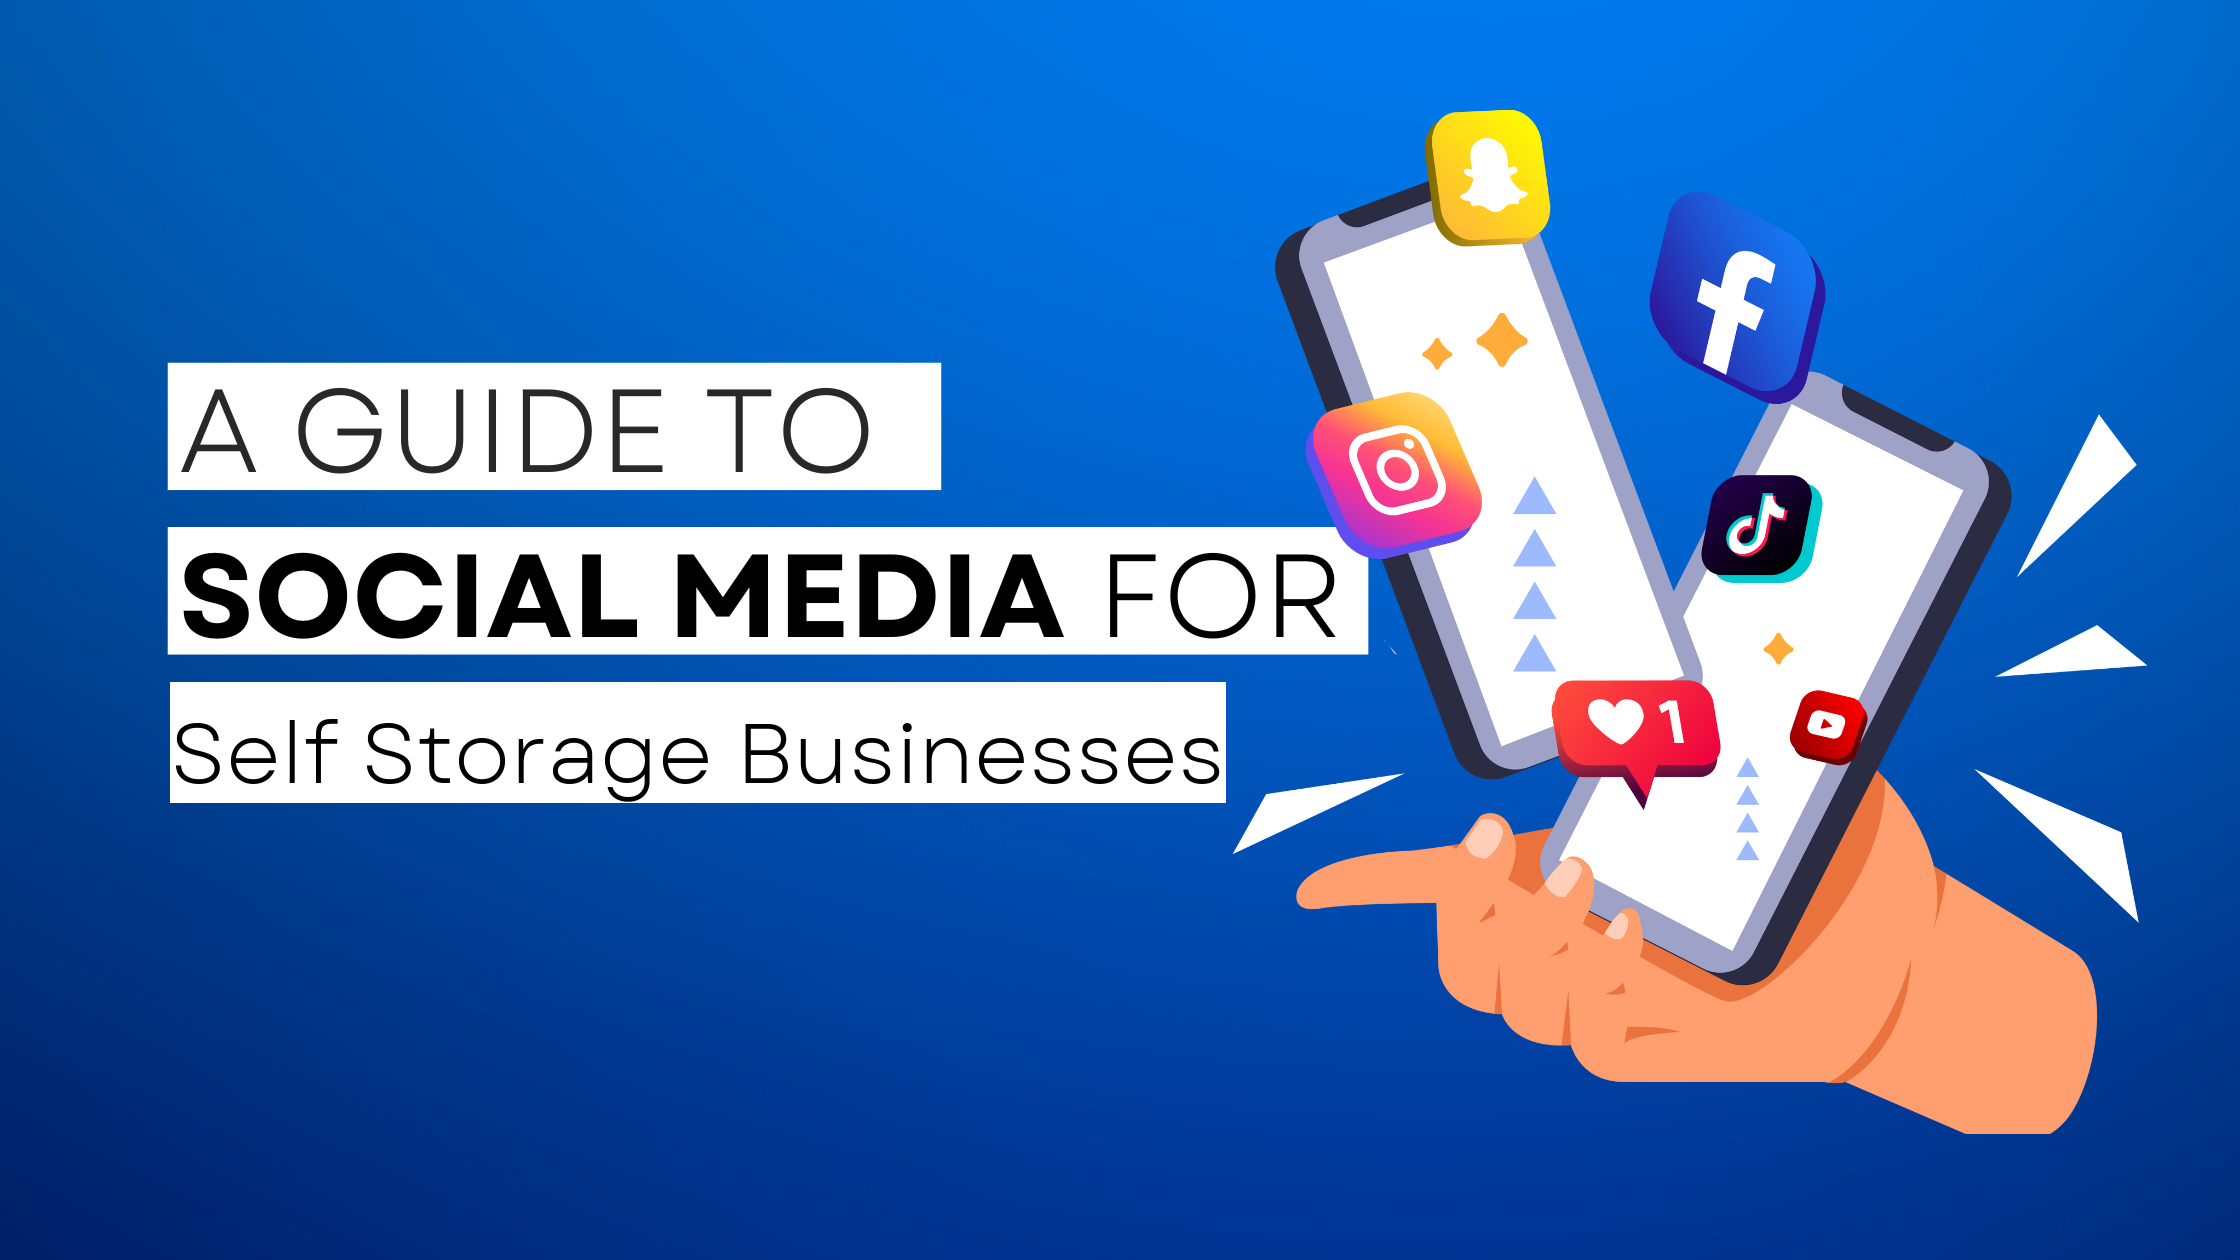 How to start Self Storage on social media